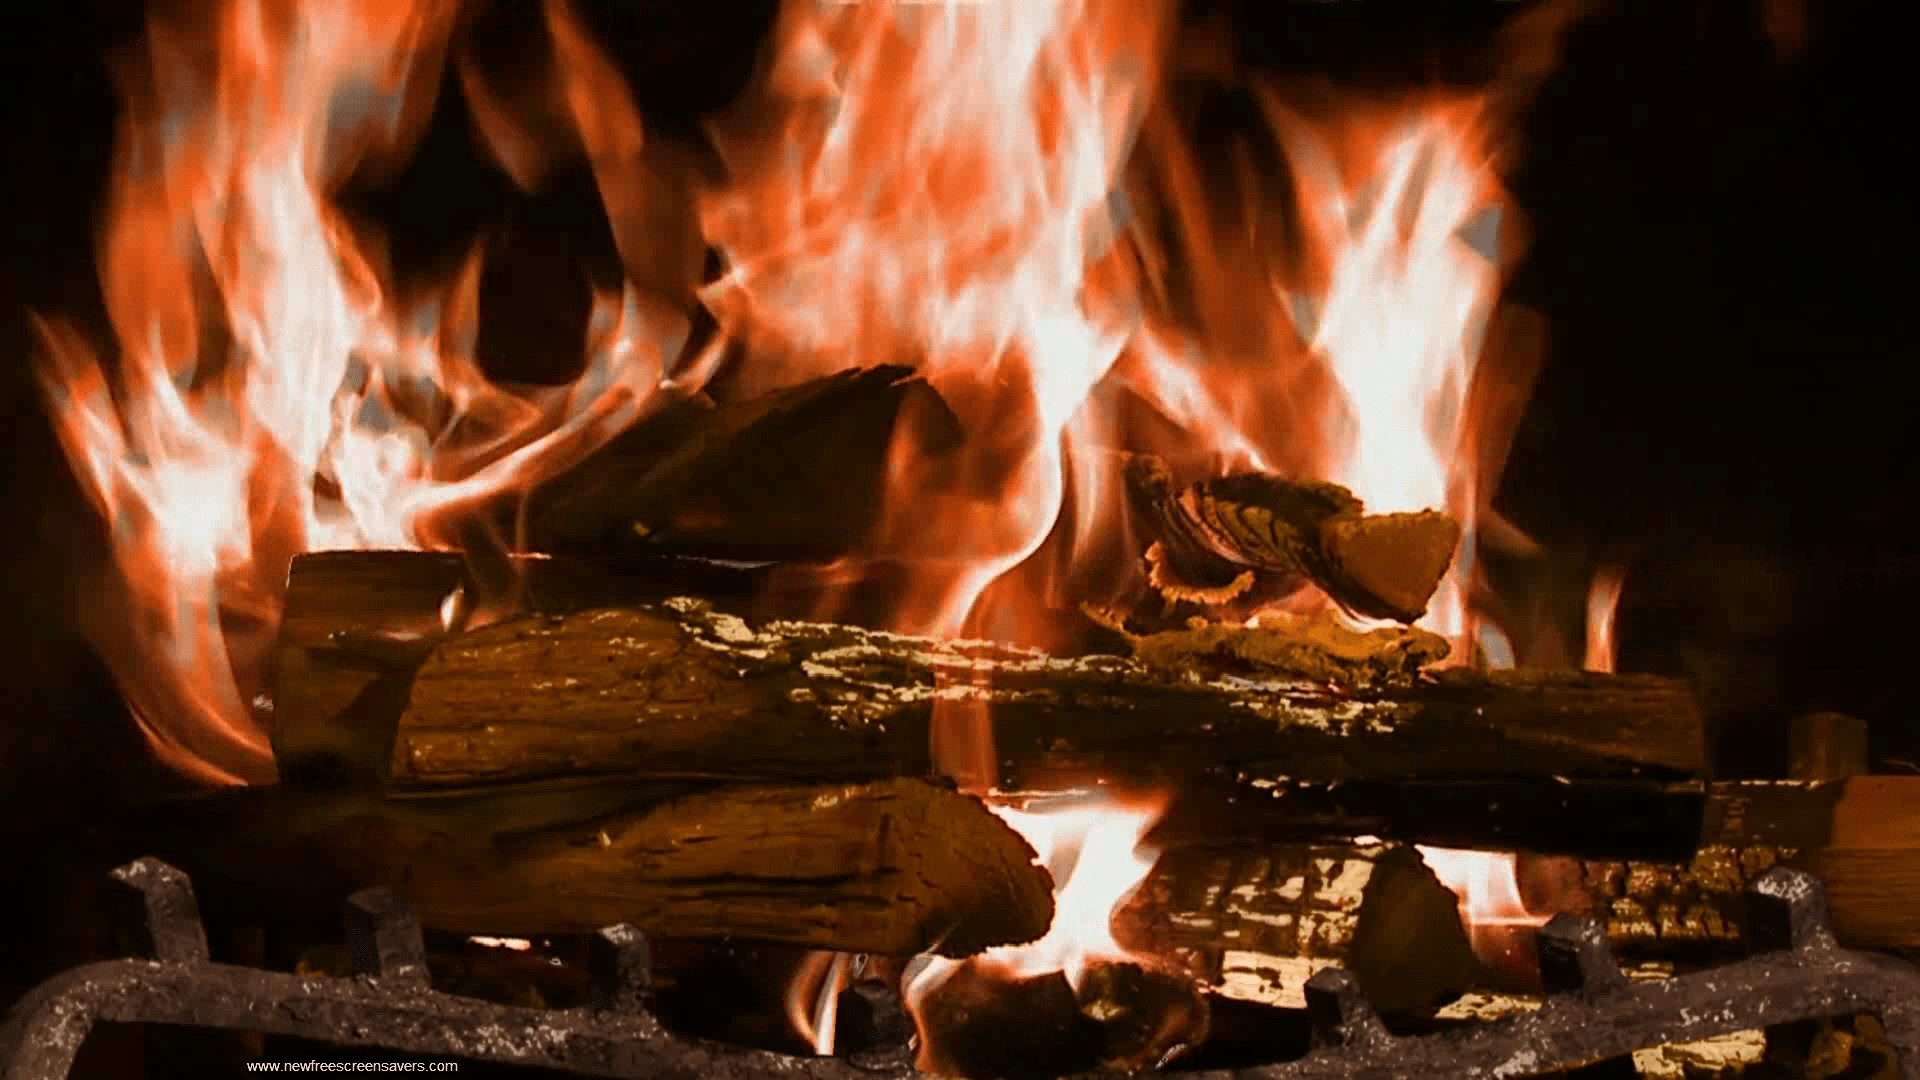 3d cozy fireplace screensaver